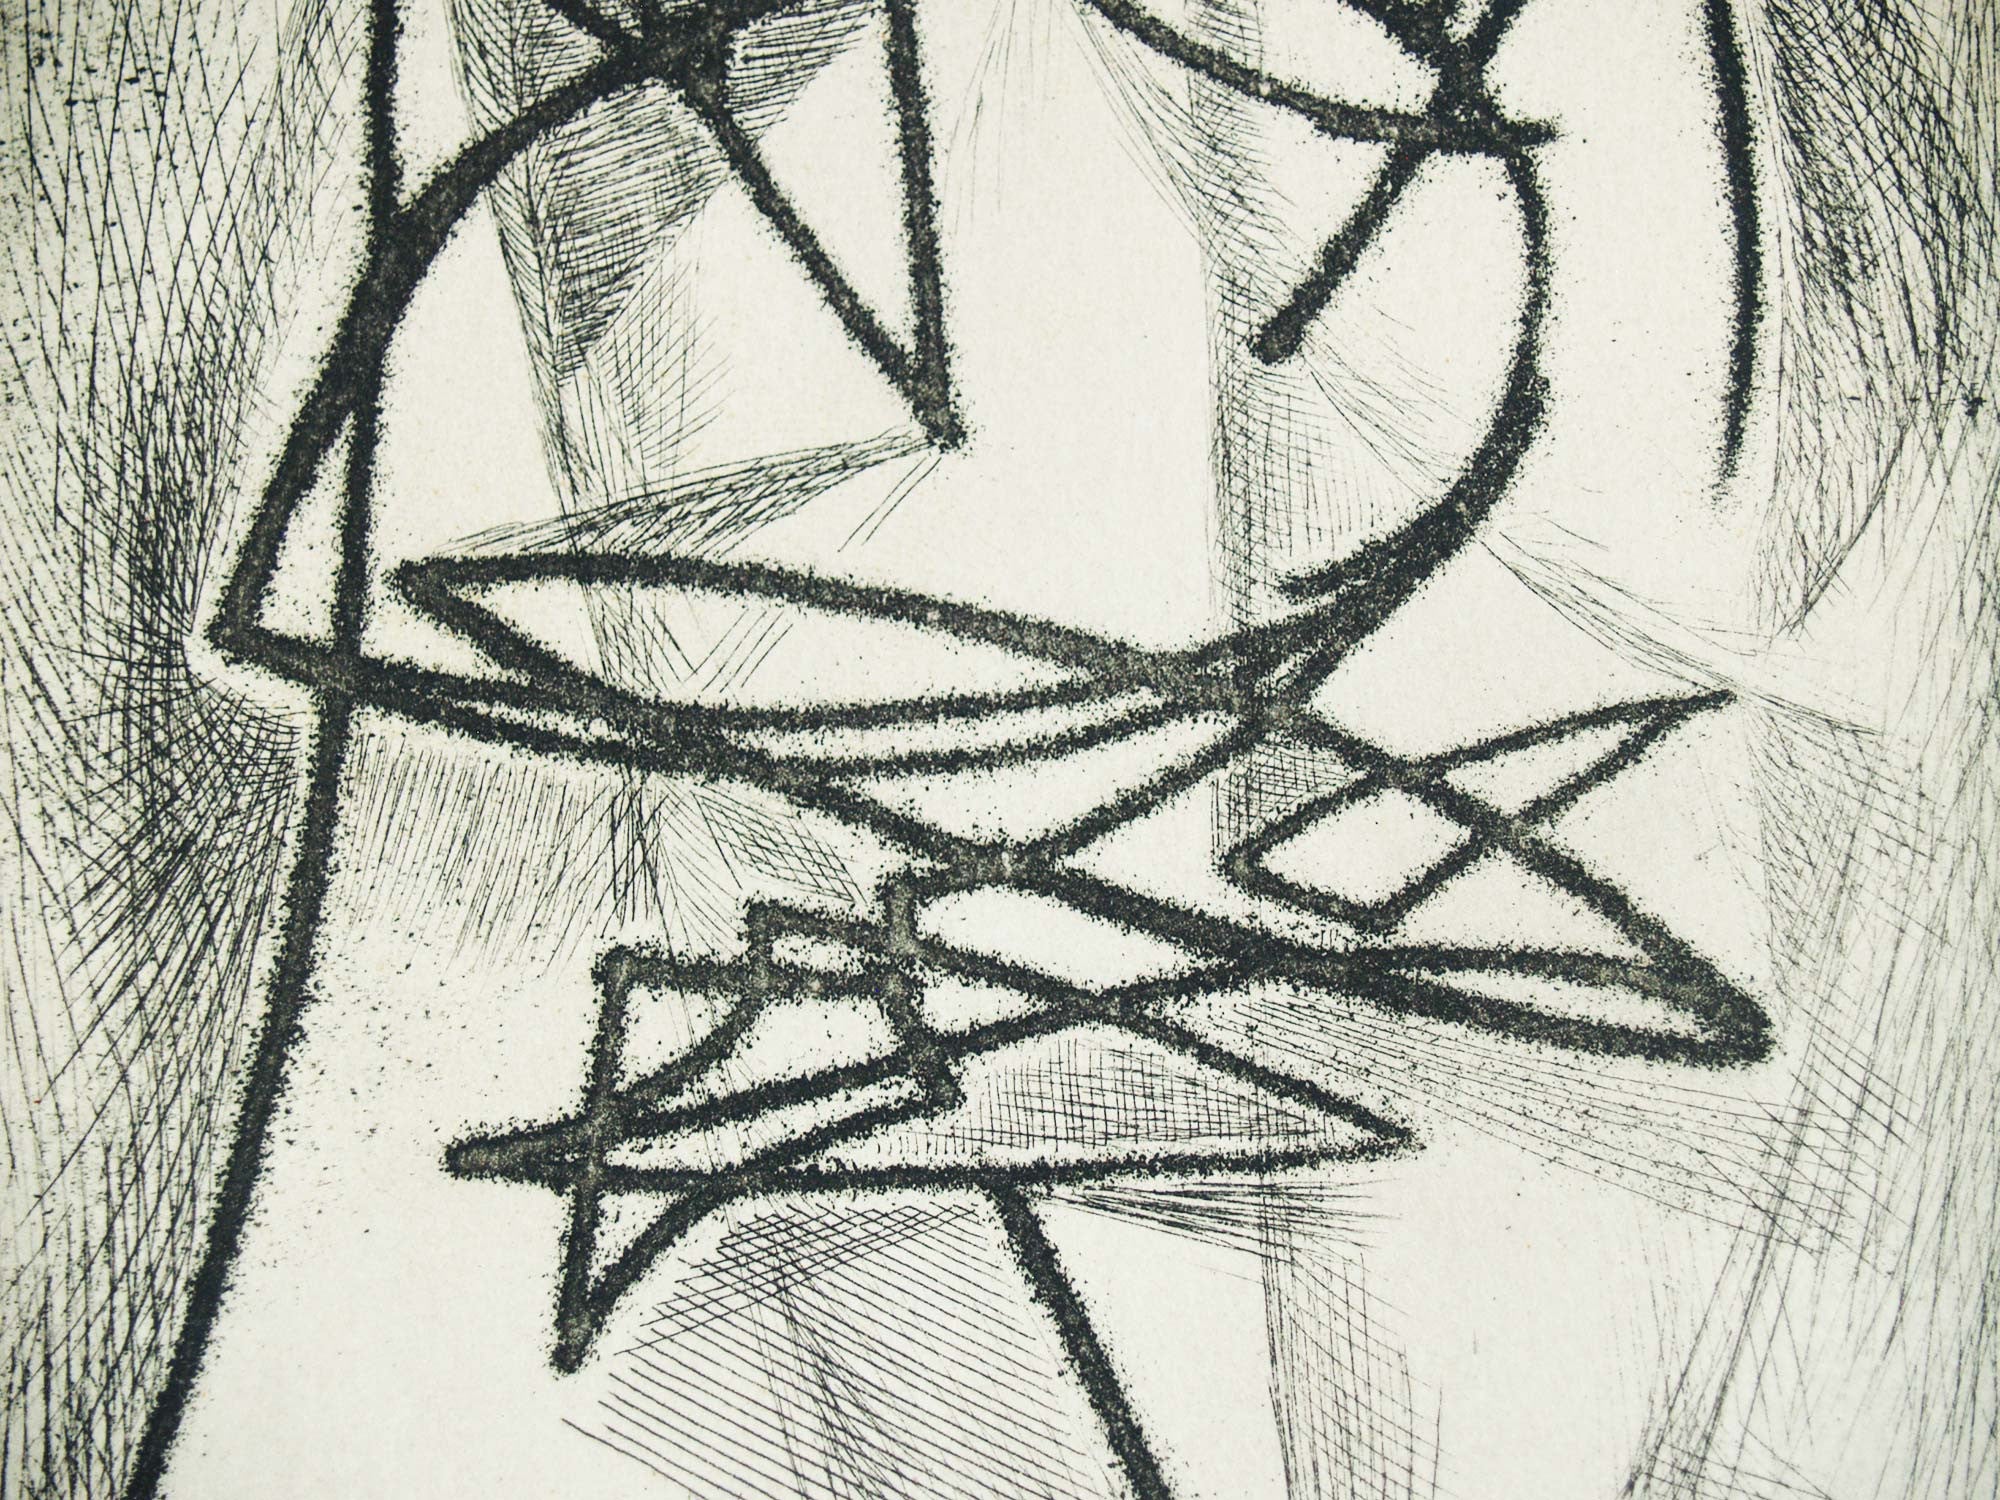 Eau-forte abstraction d’Henri Goetz, France (1951)..Abstraction Aquaforte Etching by Henri Goetz, France (1951)